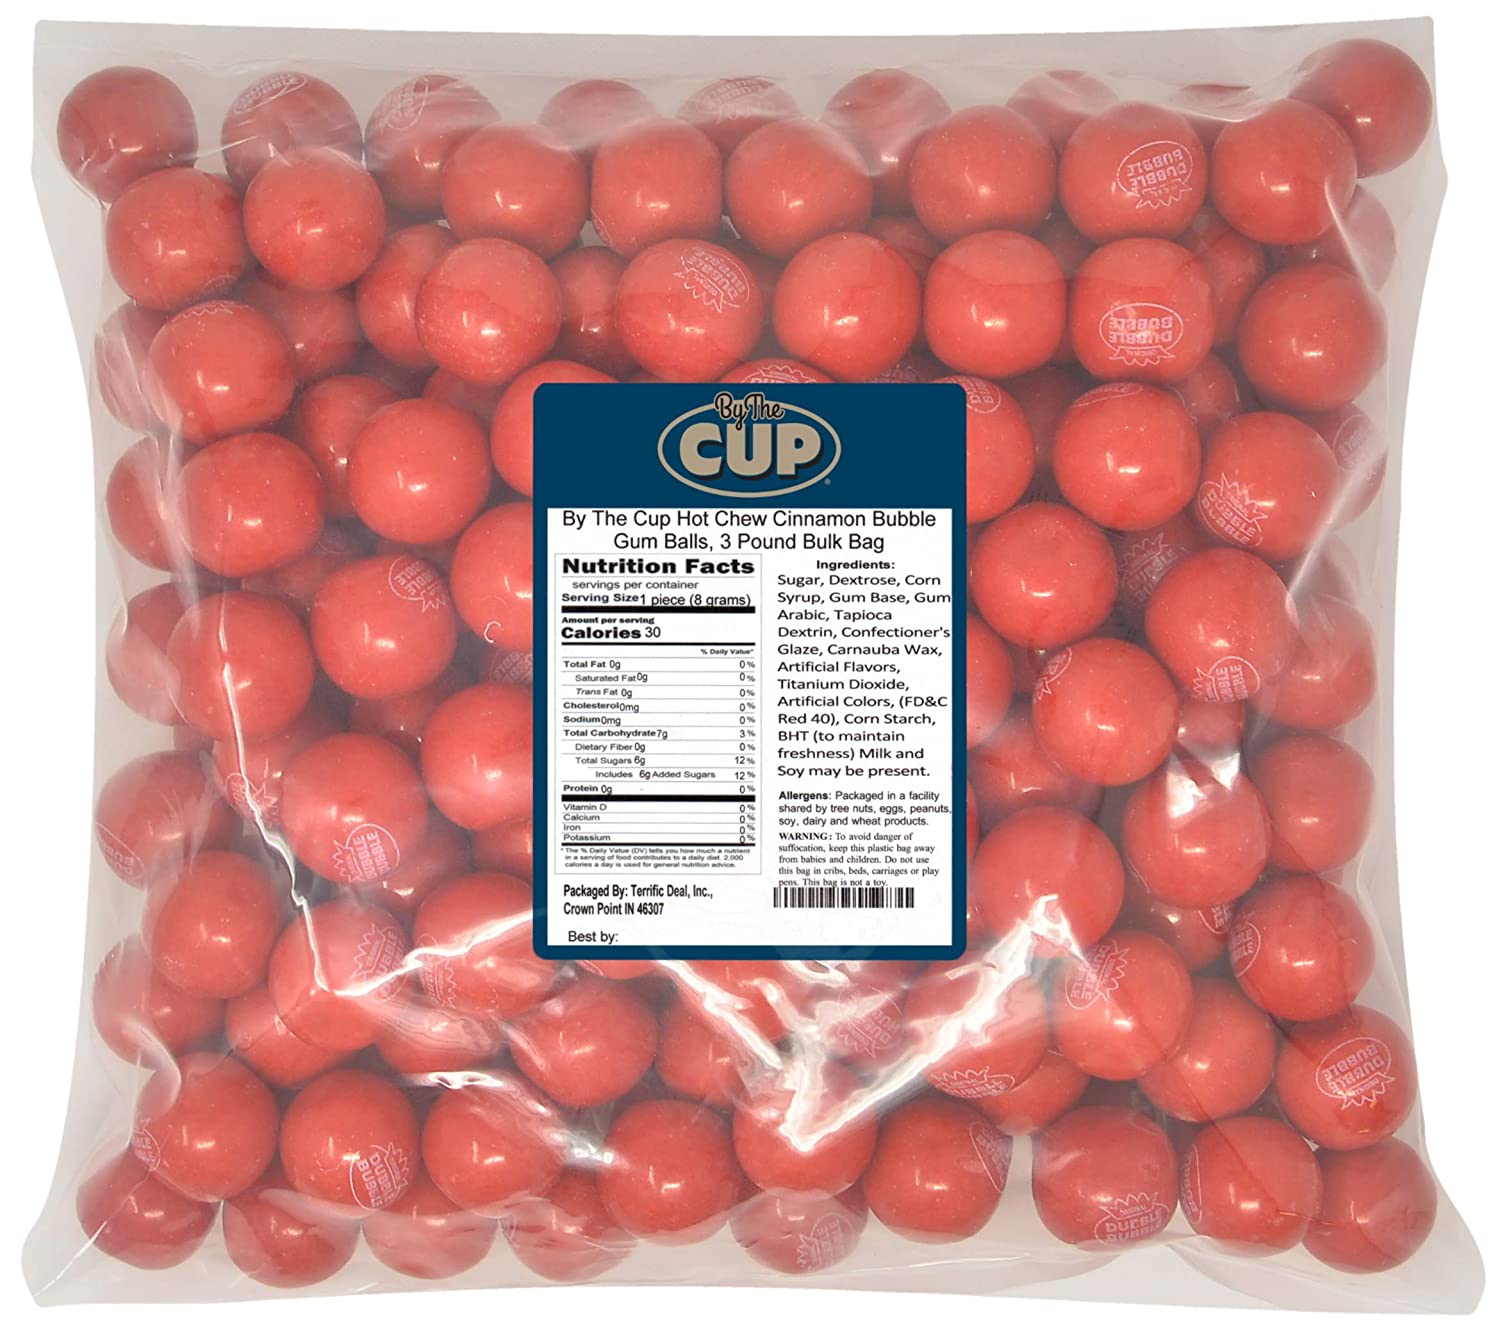 By The Cup Hot Chew Cinnamon Bubble Gum Balls, 3 Pound Bulk Bag